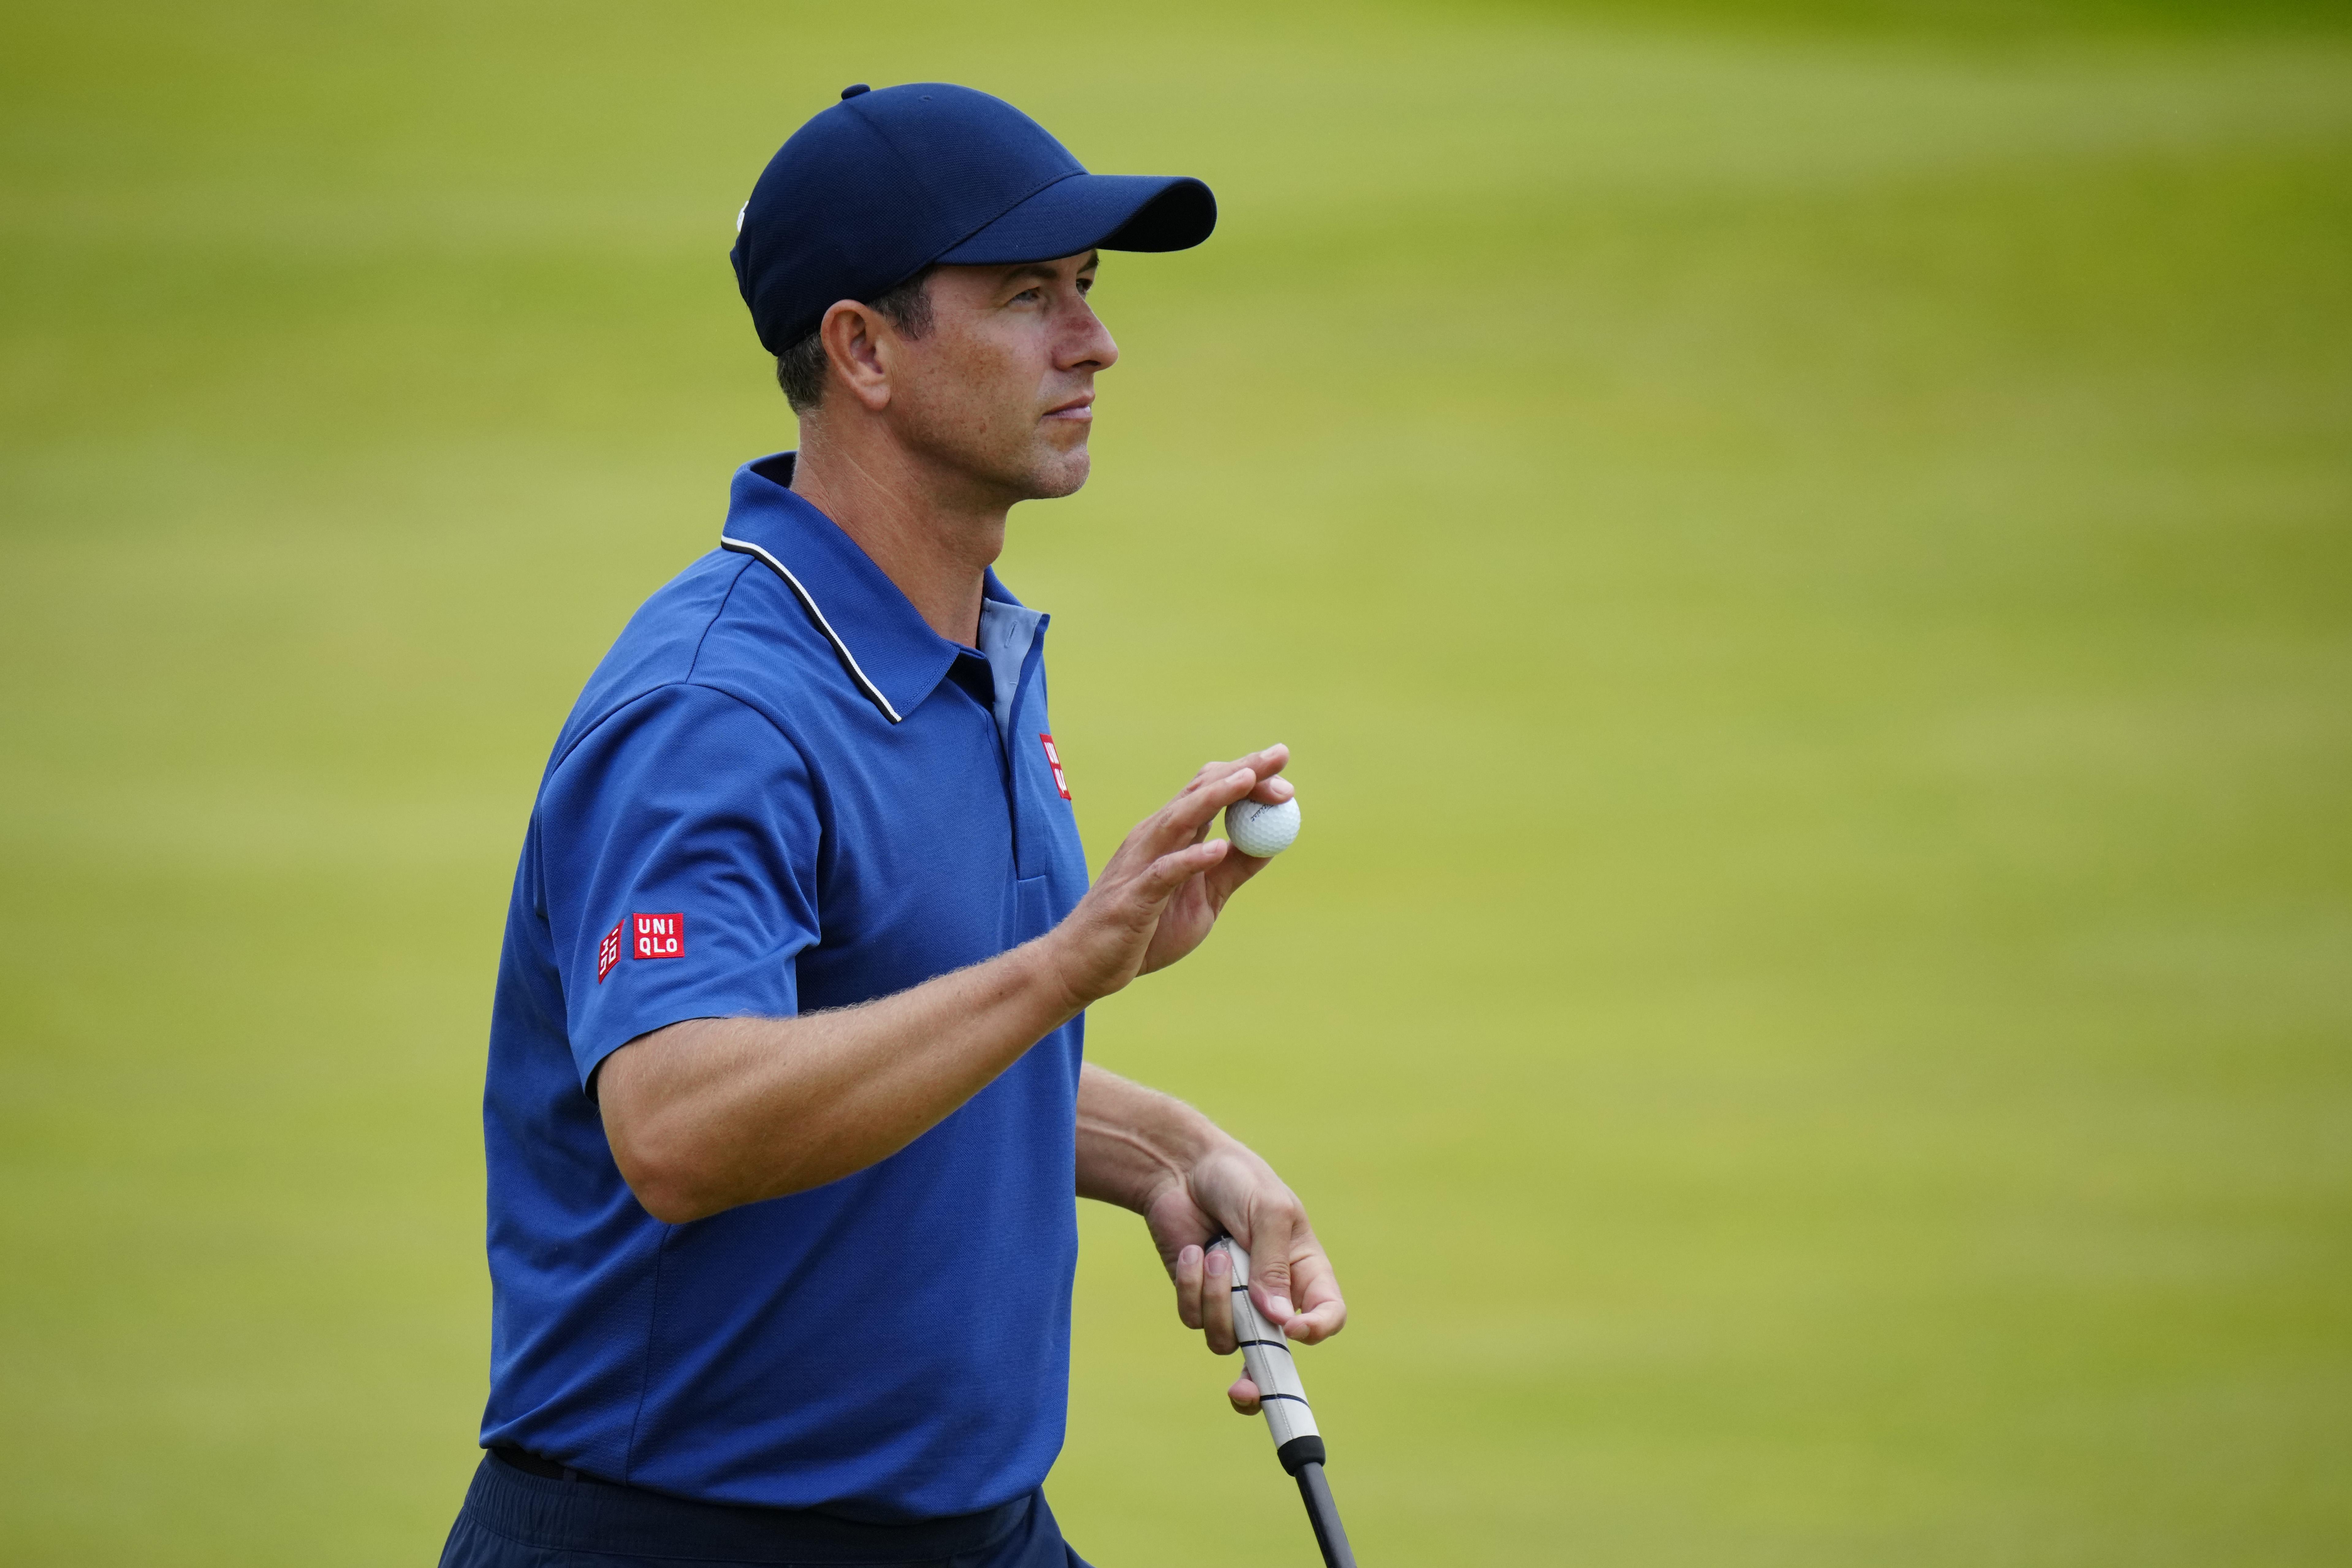 PGA Tour offers last chance for 70 players to make postseason